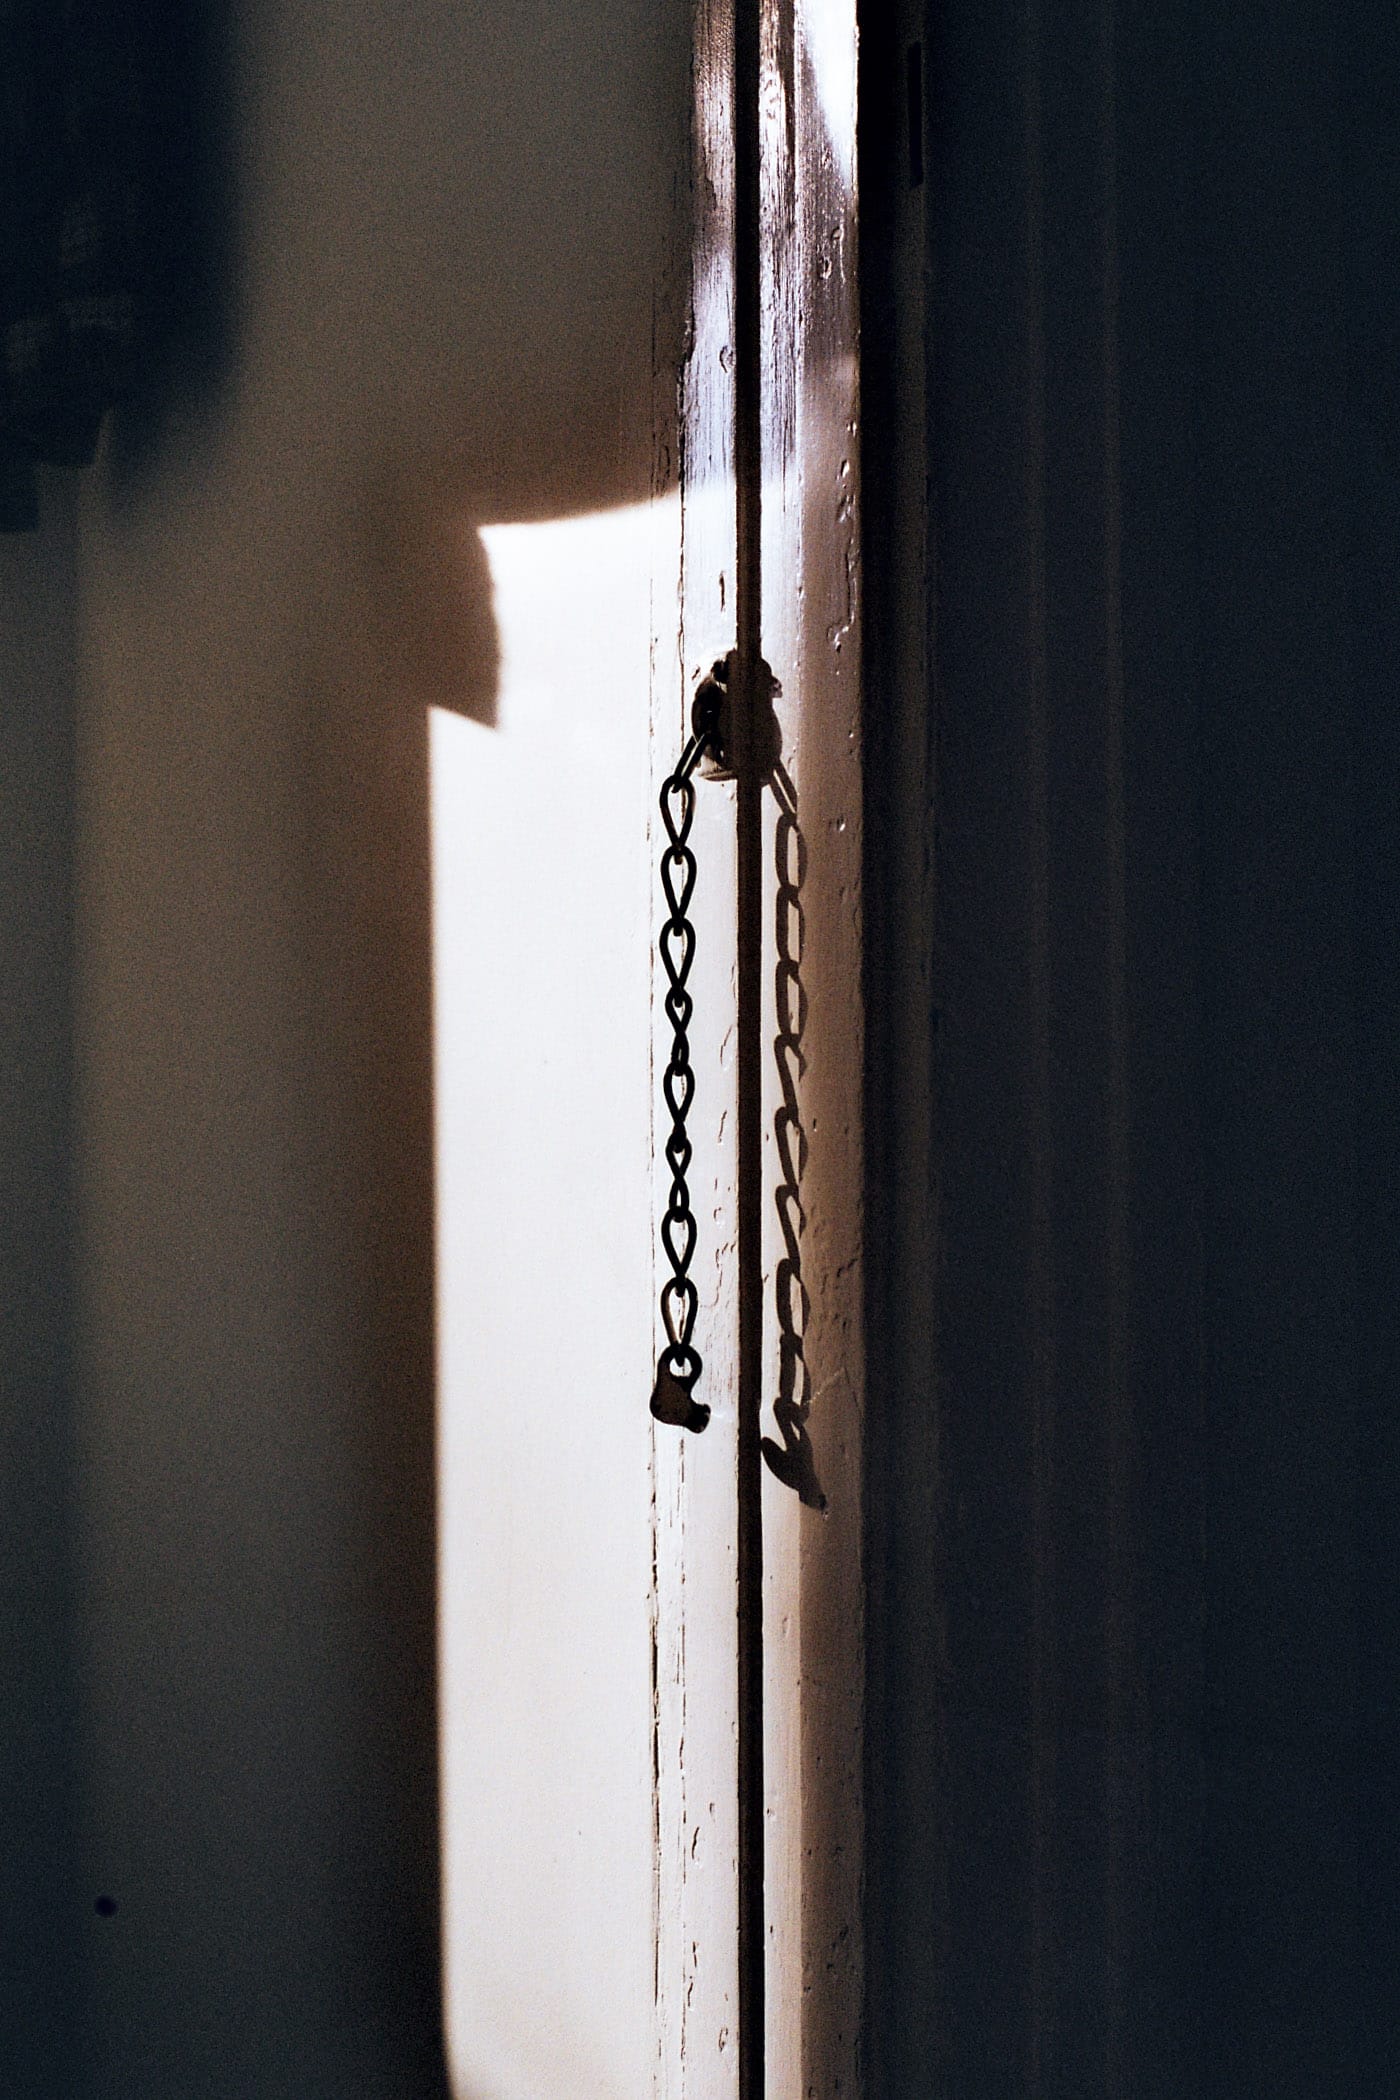 A locking chain hanging